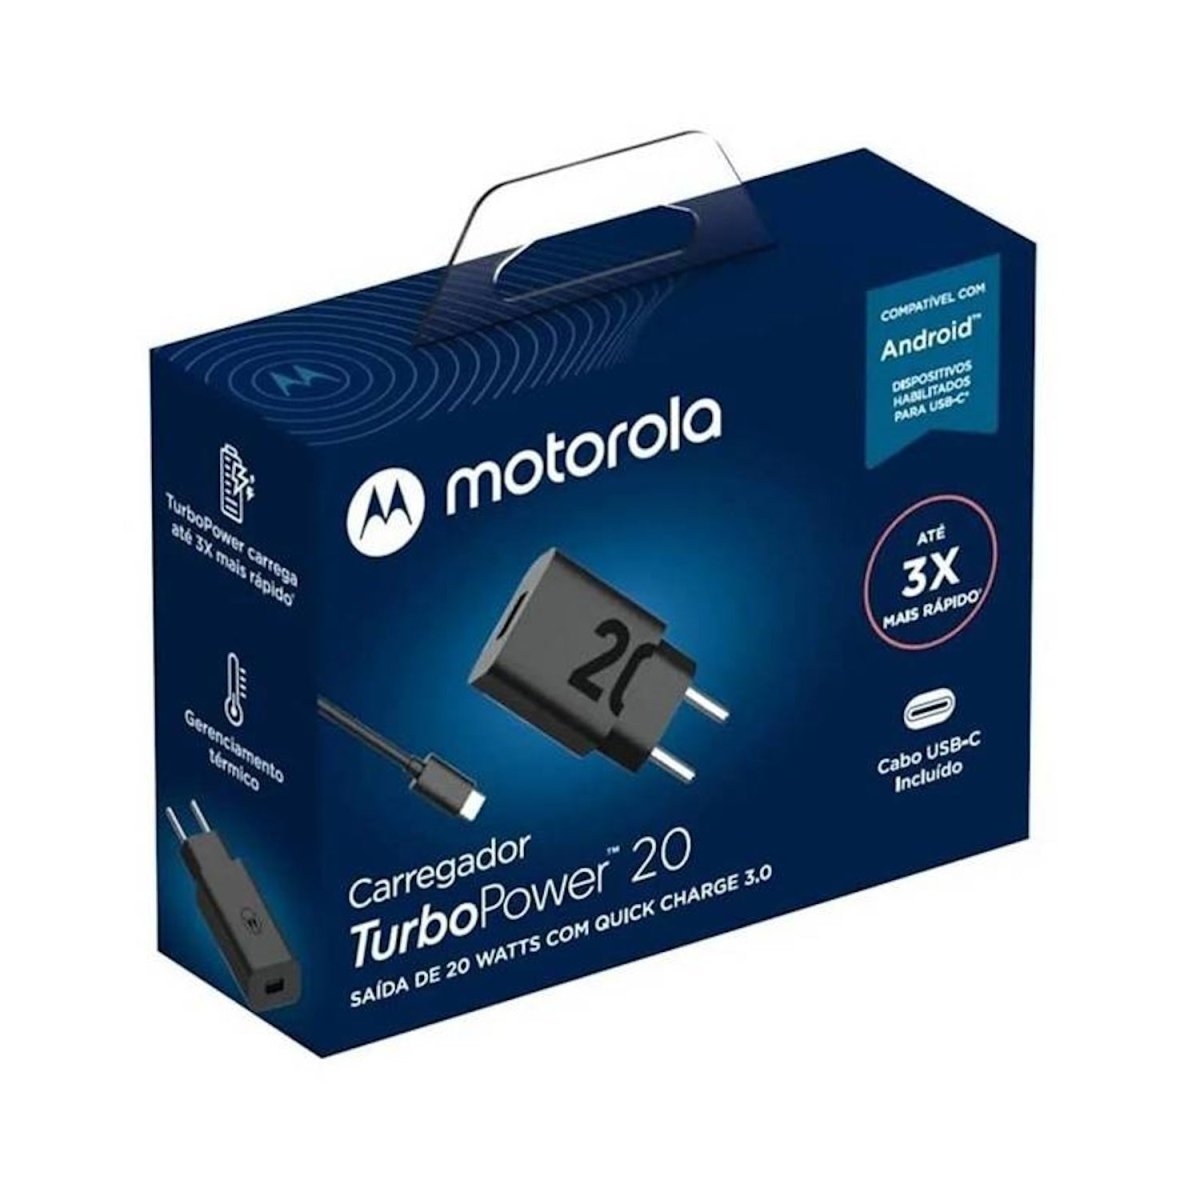 Cargador teléfono Motorola - Turbo Power 20W USB QC3.0 - Motorola - COMERCIAL BELSAN SPA - 6955226412660